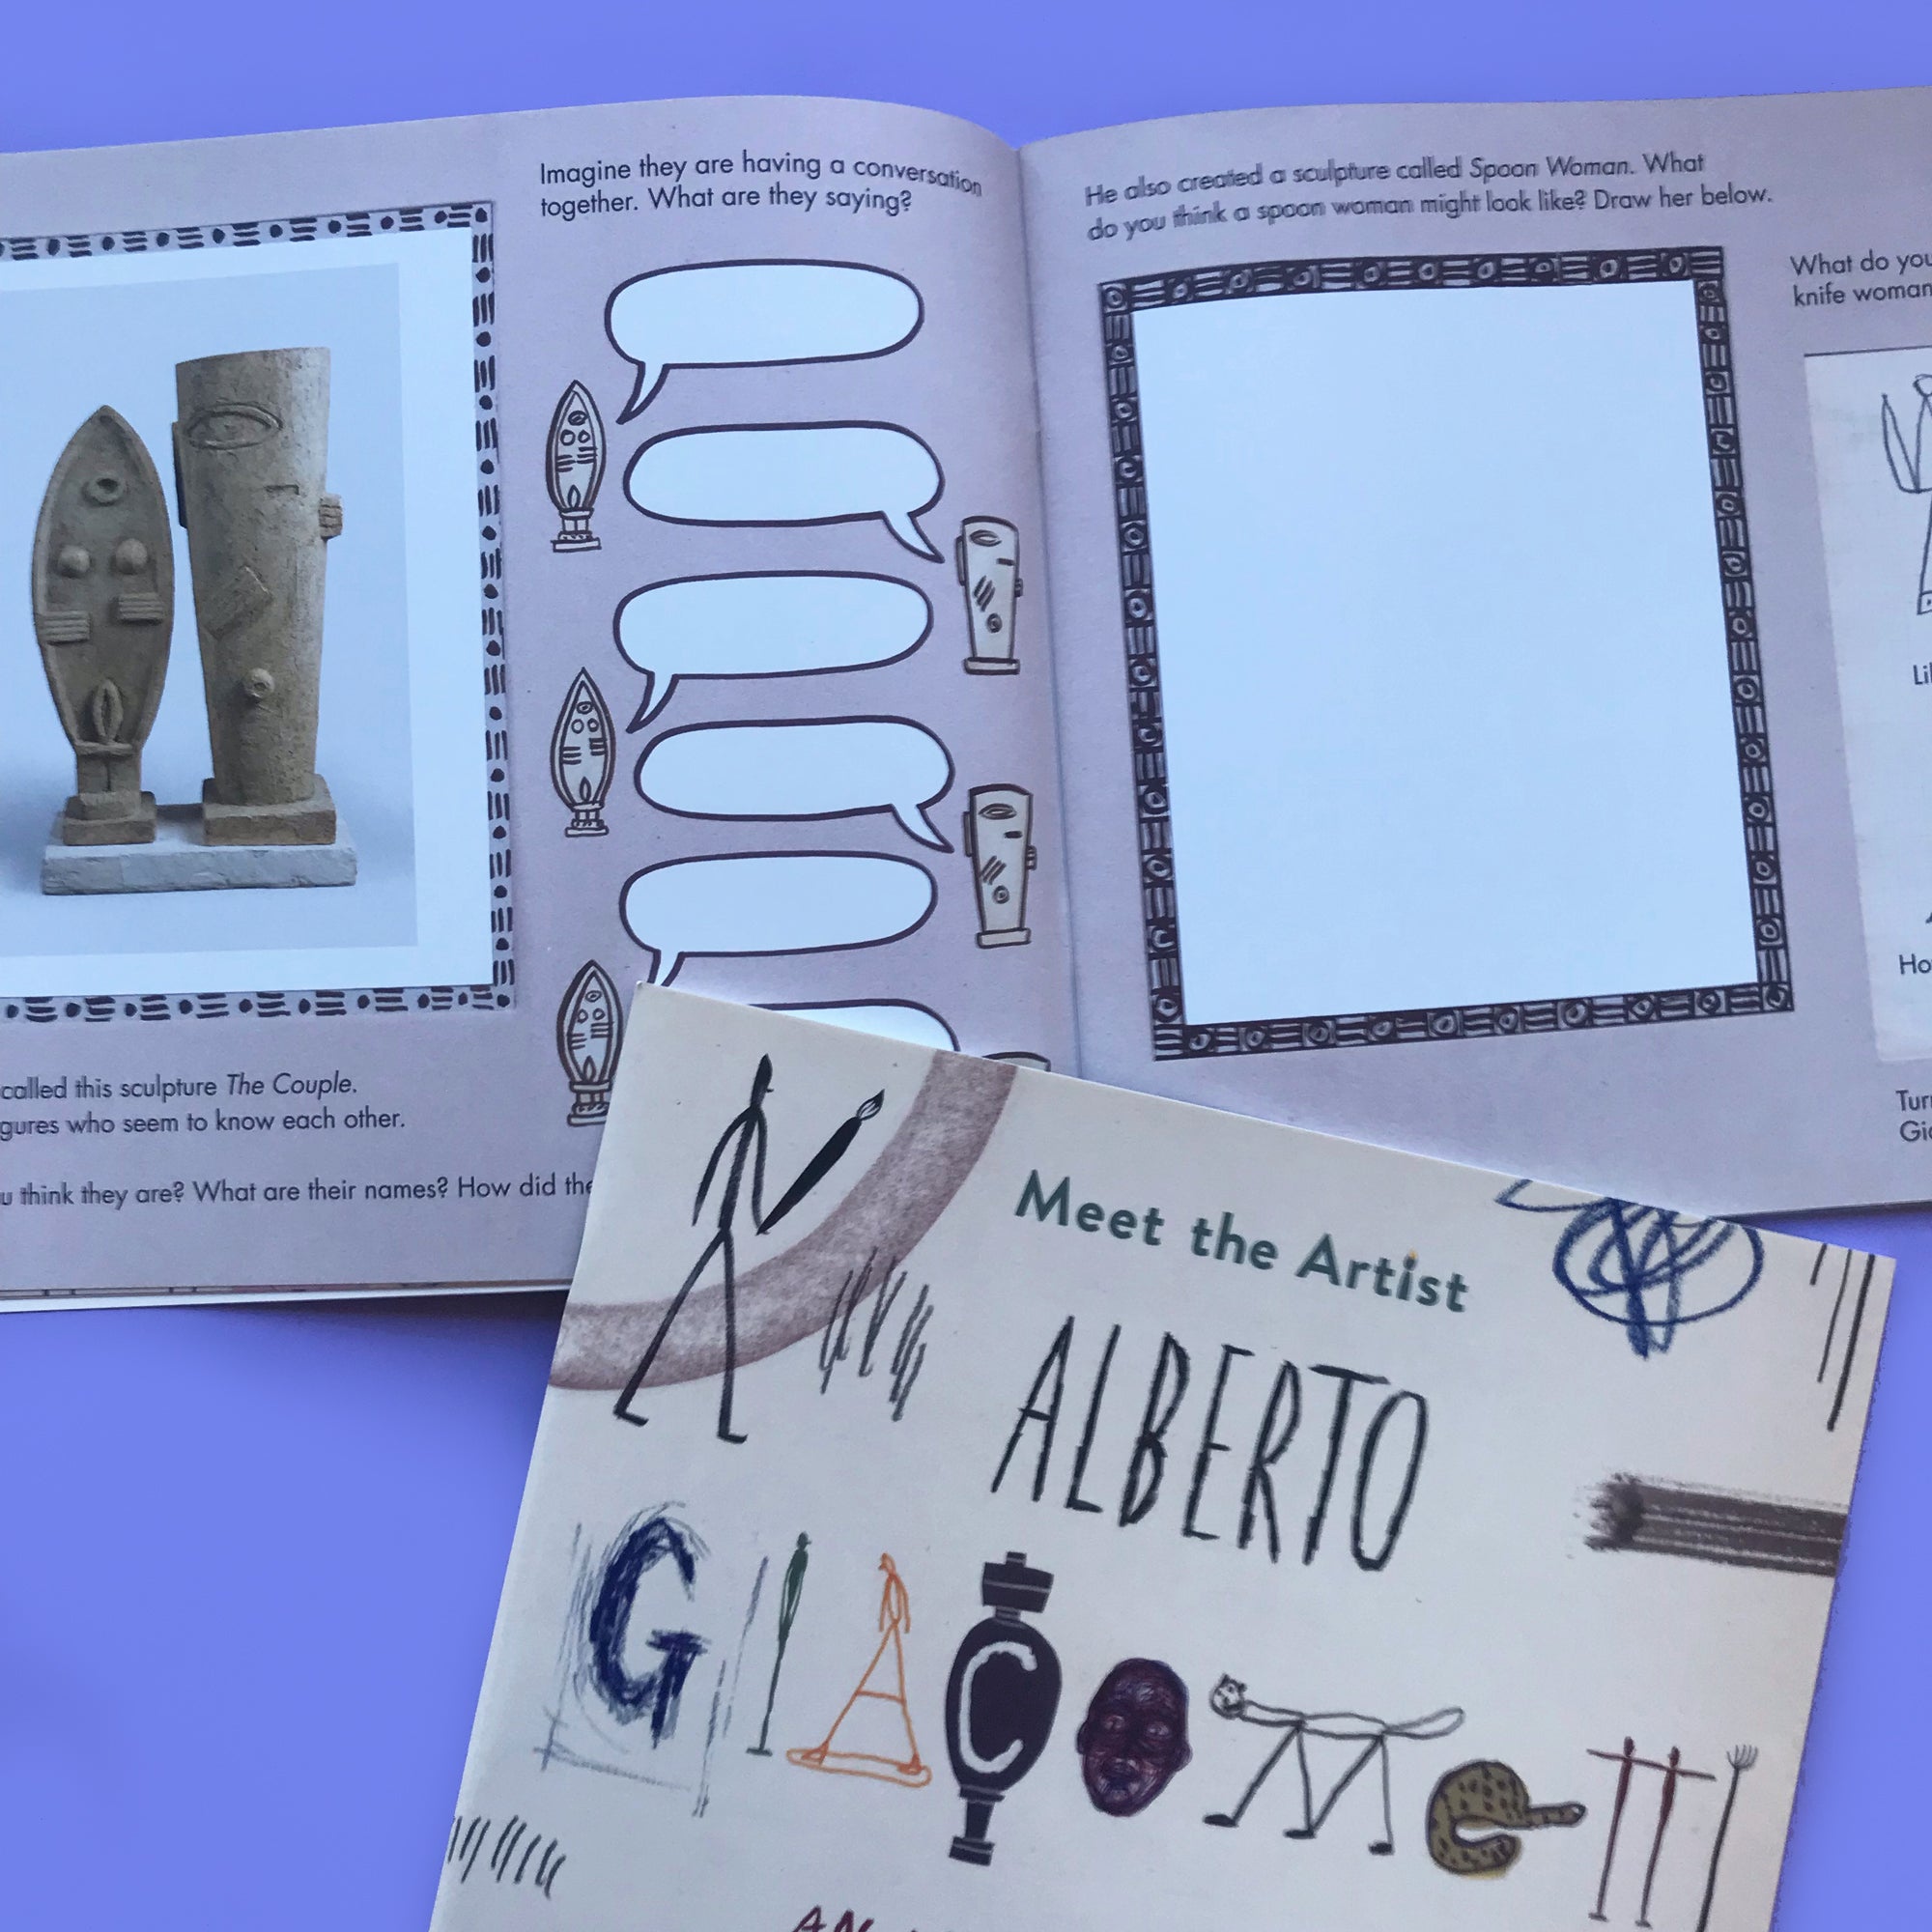 Meet the Artist: Alberto Giacometti activity book